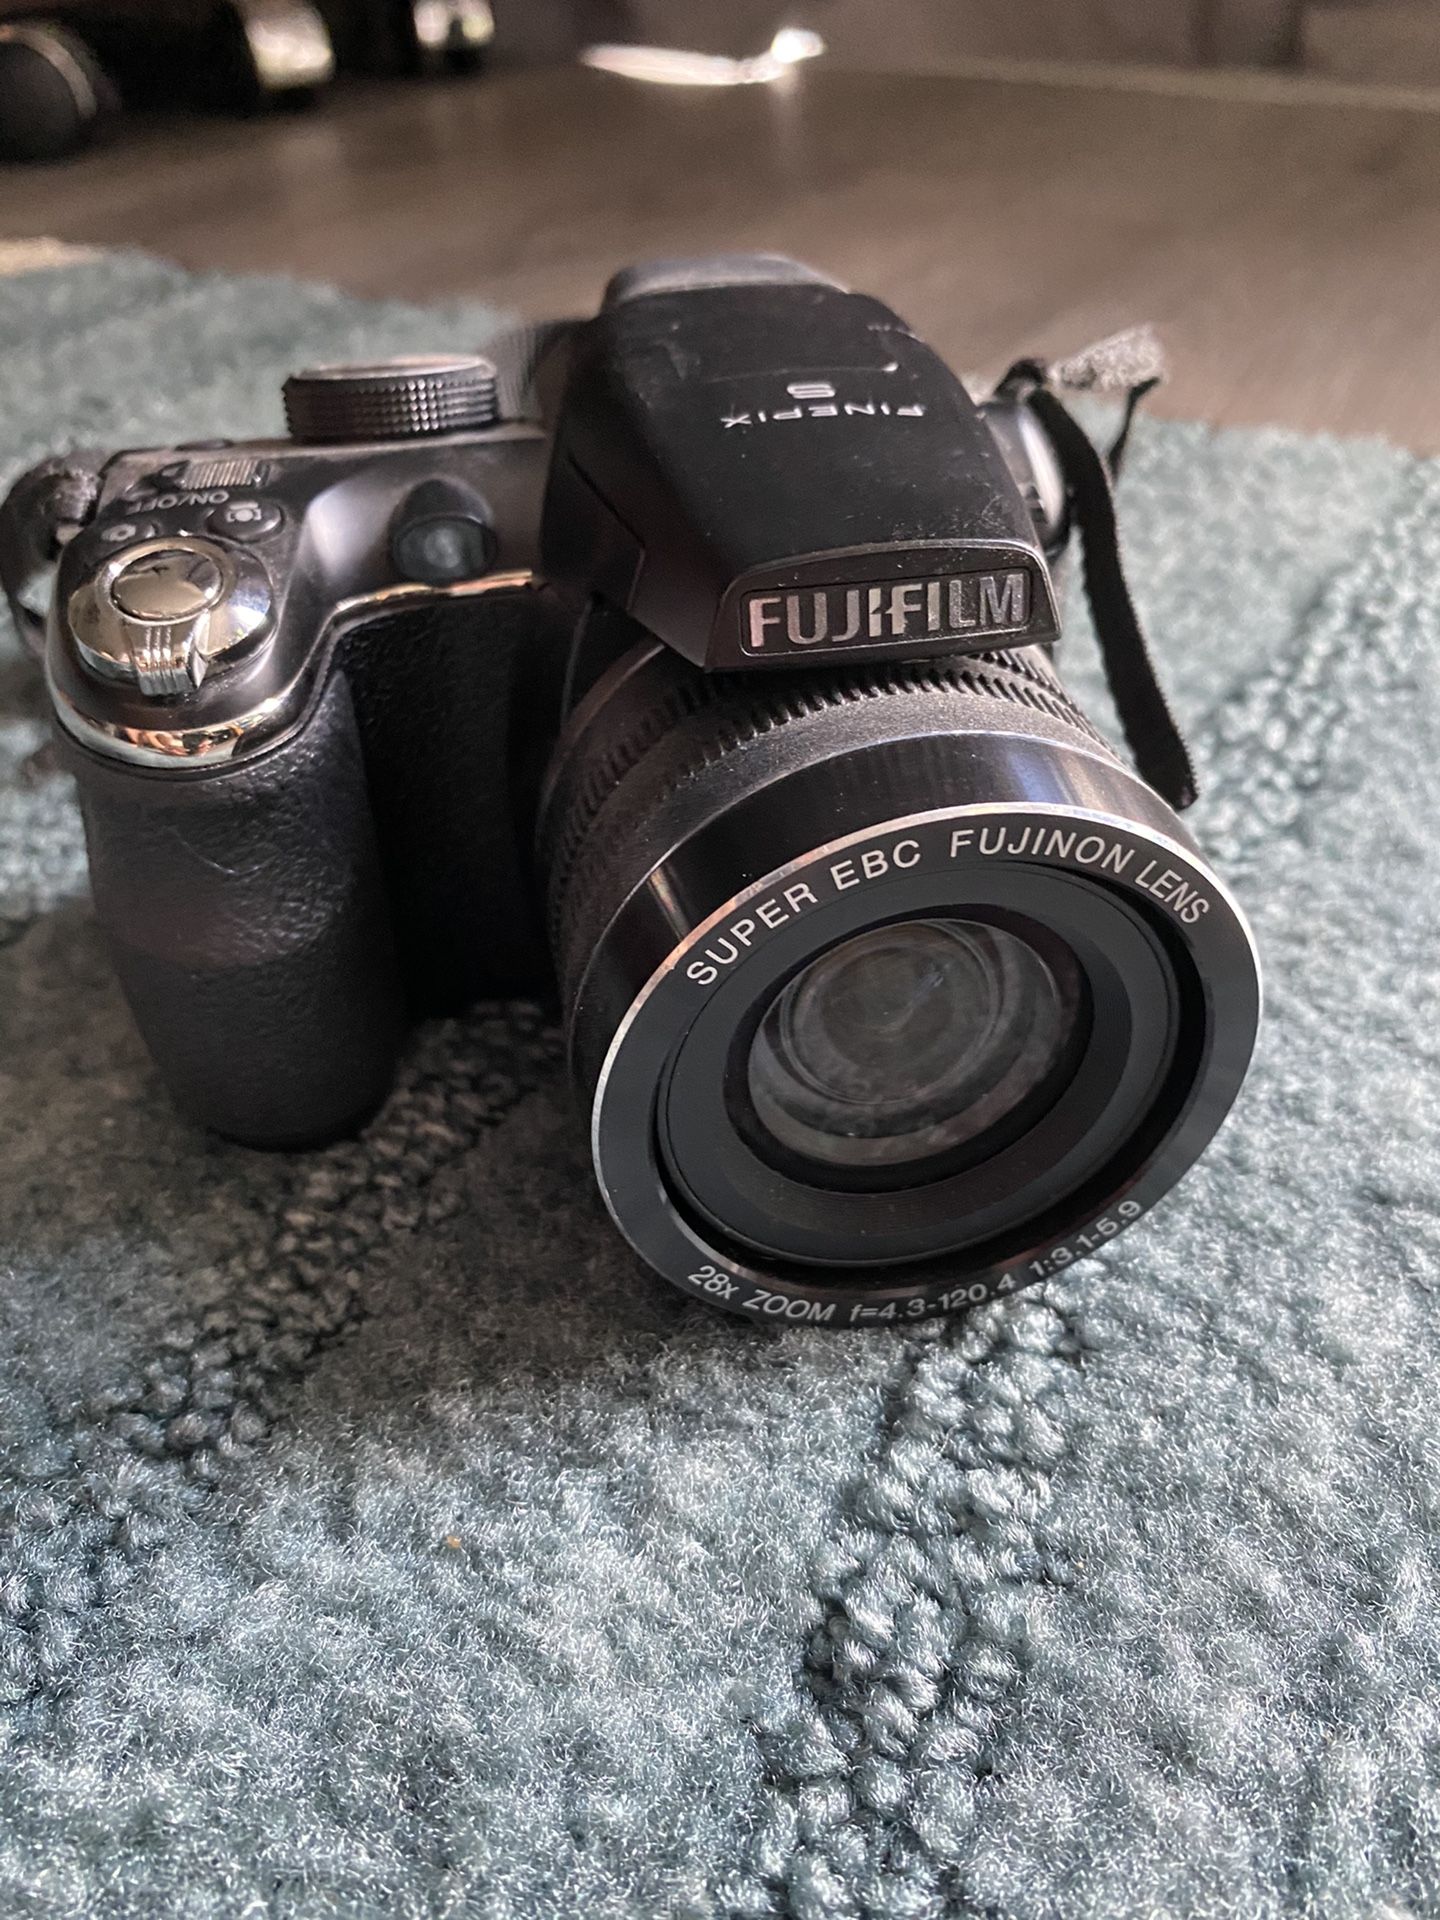 Fuji film Finepix S 14 Megapixel Camera 